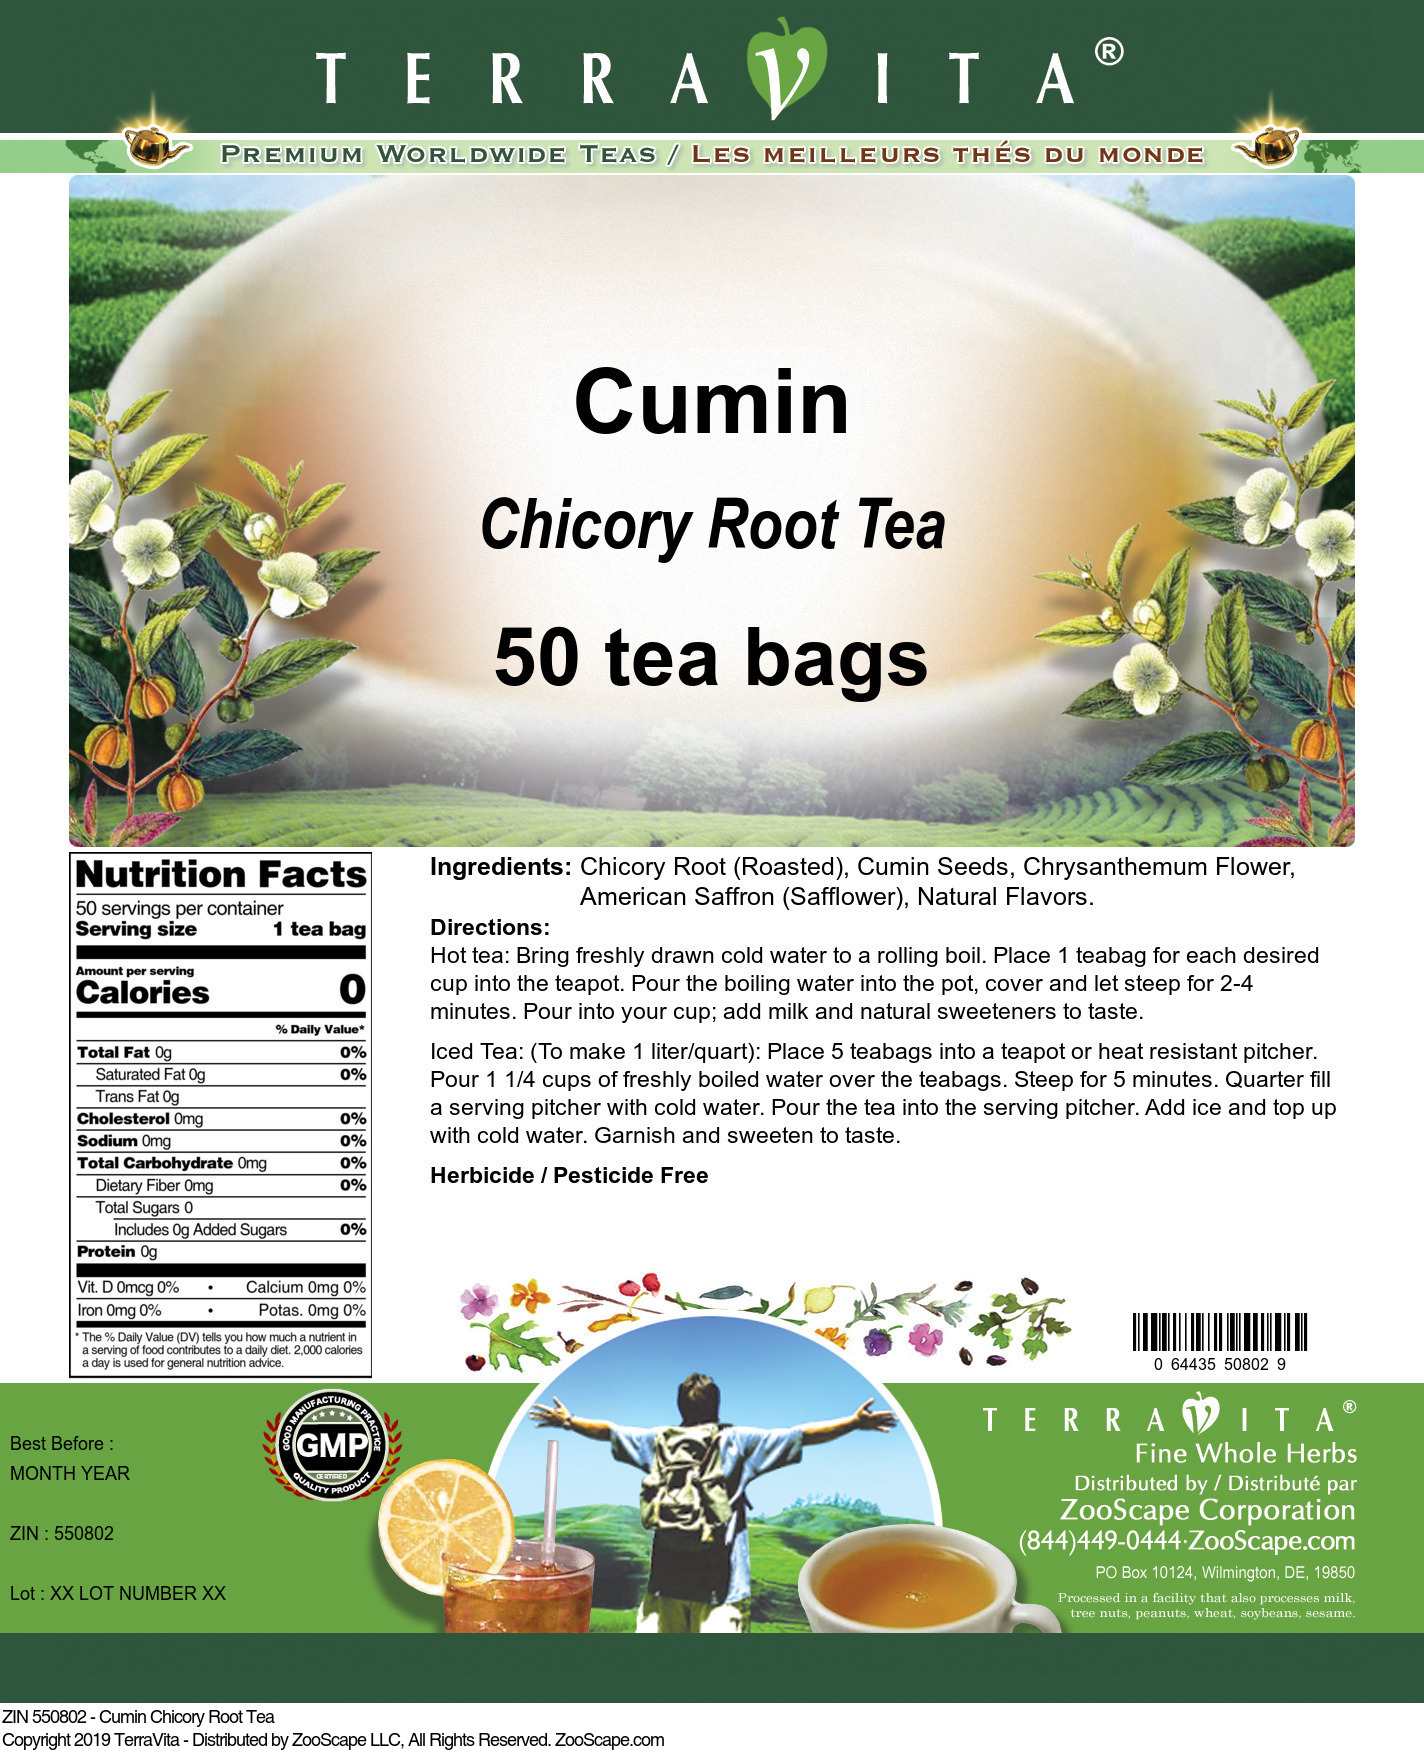 Cumin Chicory Root Tea - Label